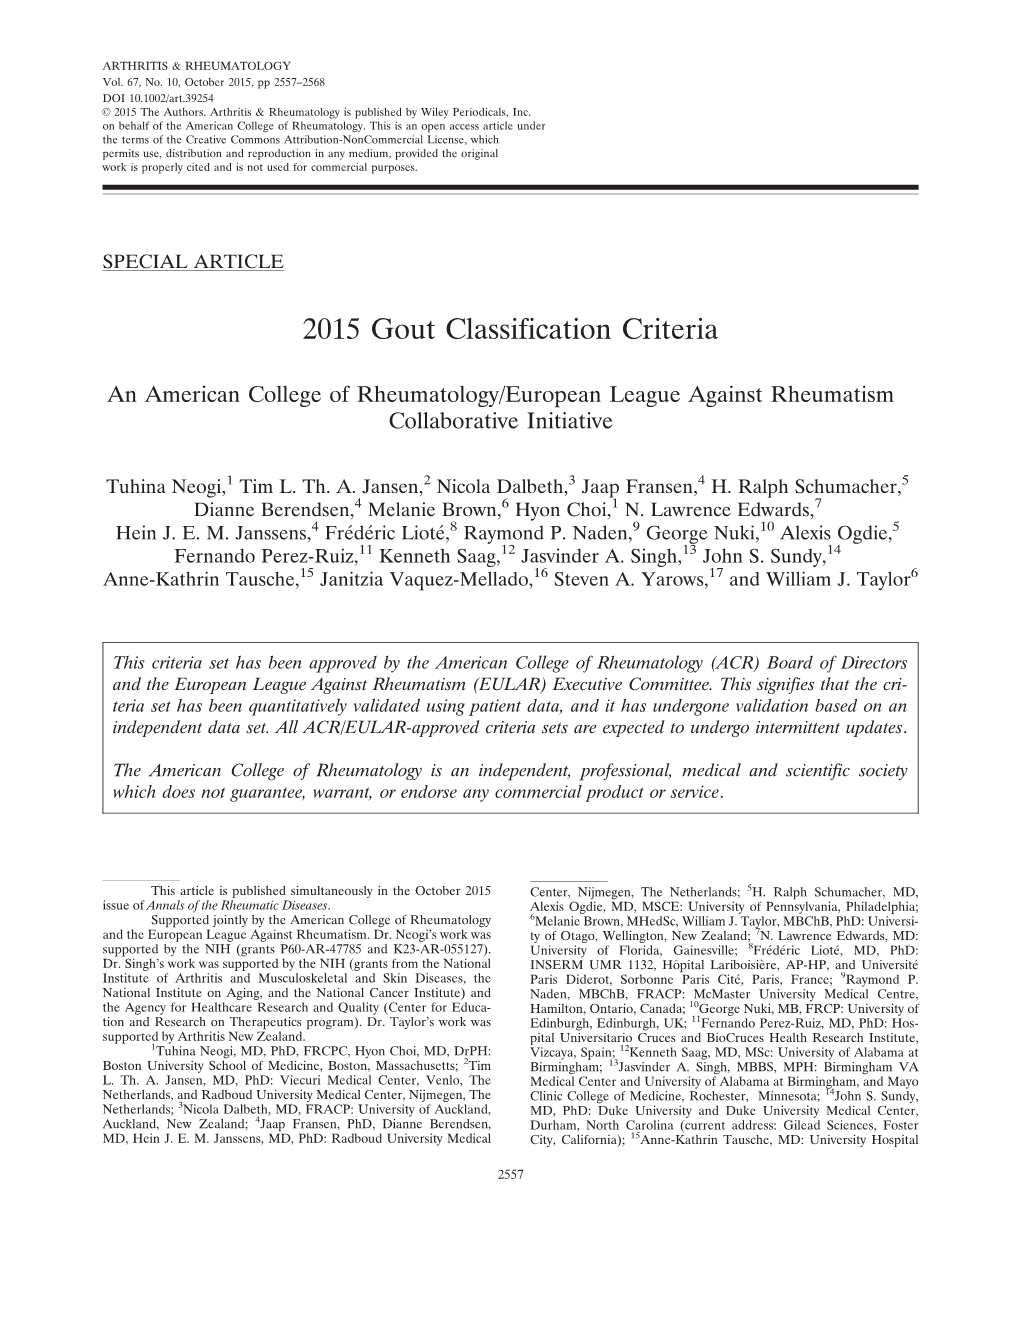 2015 Gout Classification Criteria